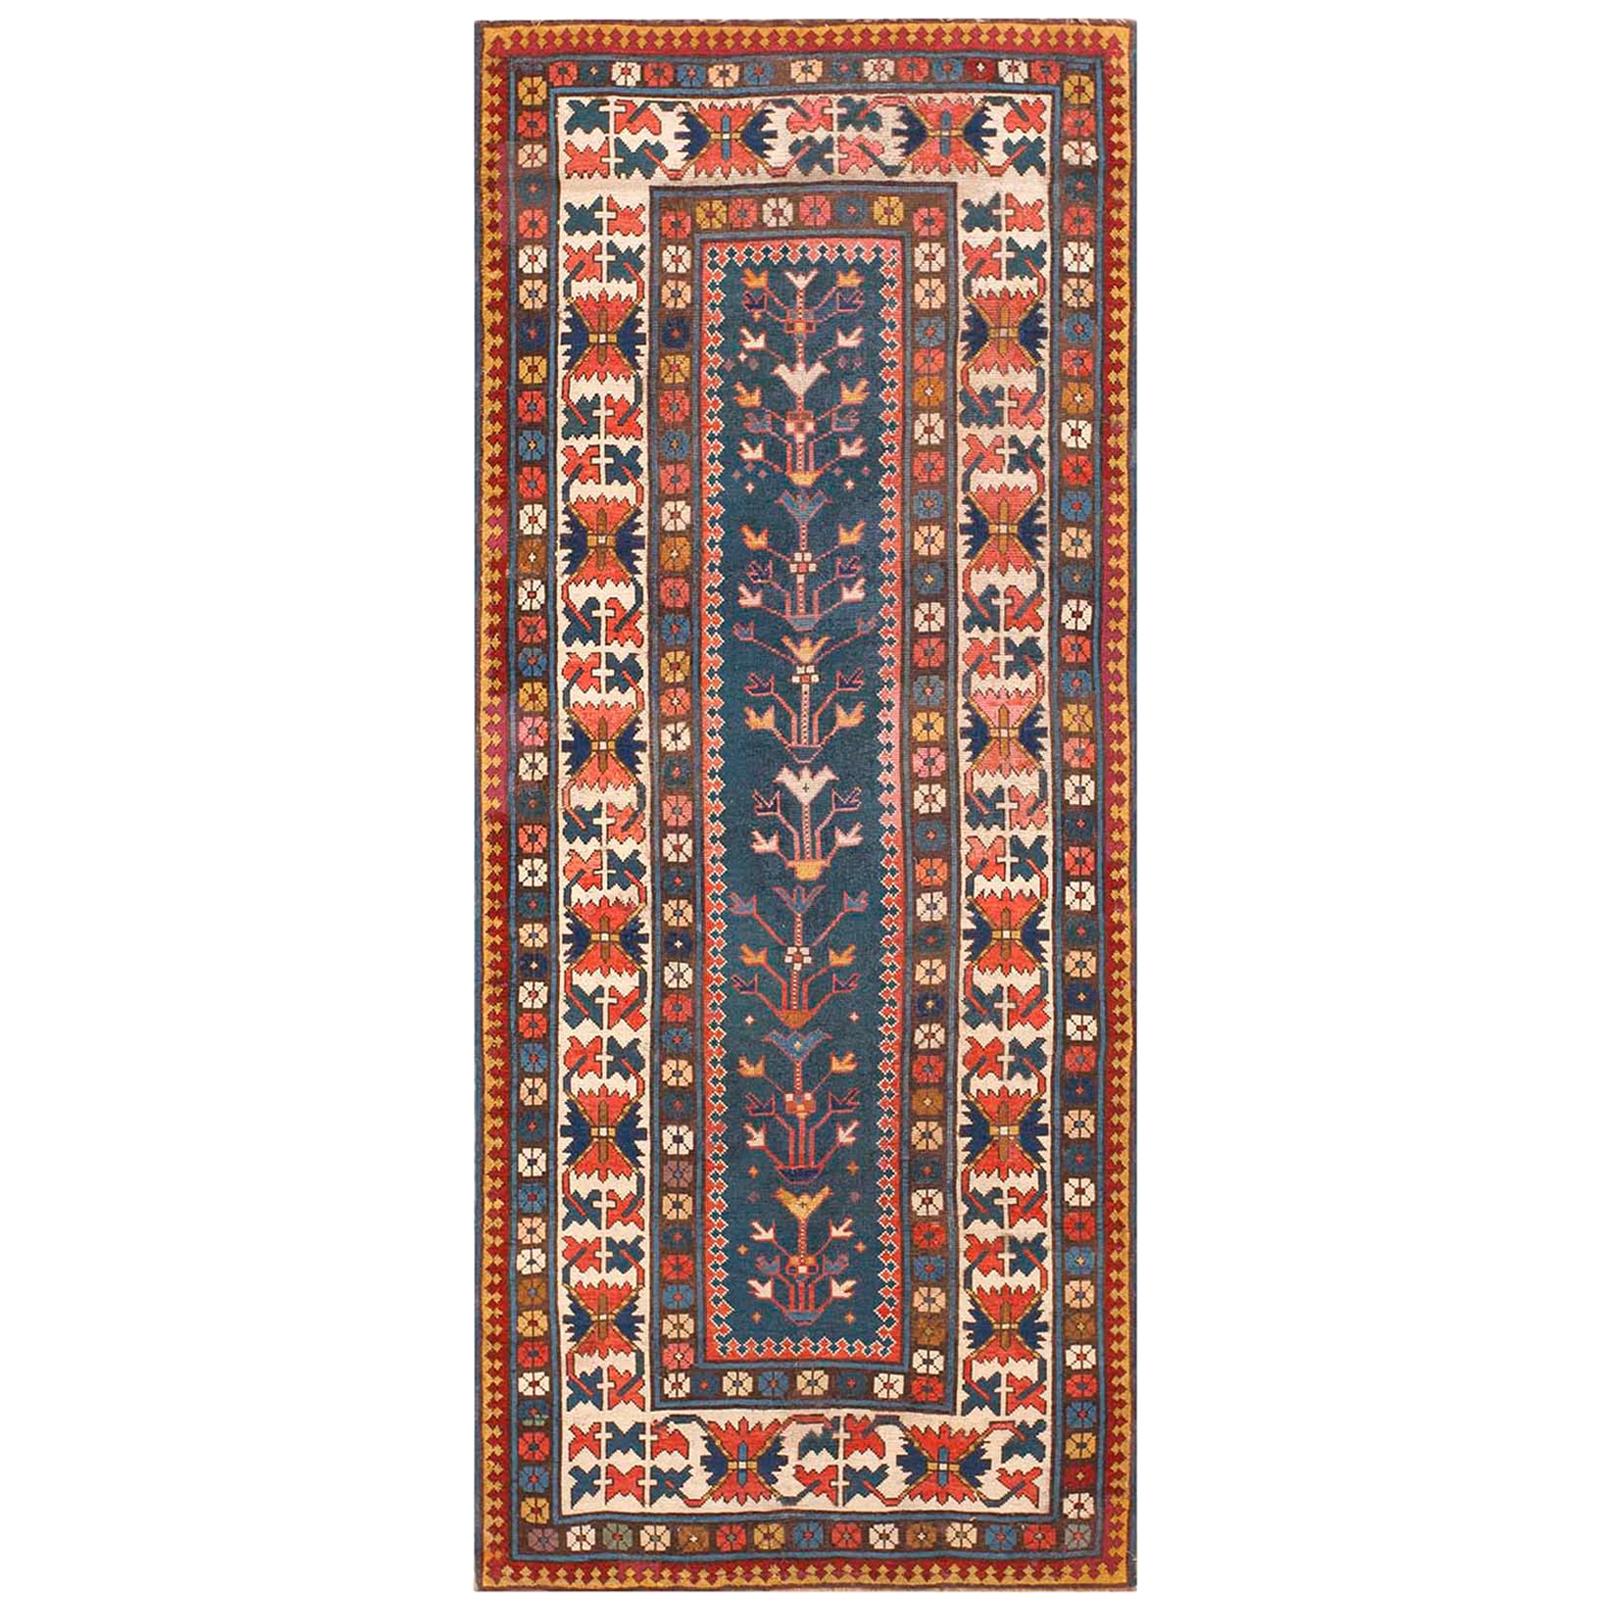 19th Century Caucasian Kazak Tree of Life Carpet ( 3'7" x 8'2" - 109 x 249 ) For Sale